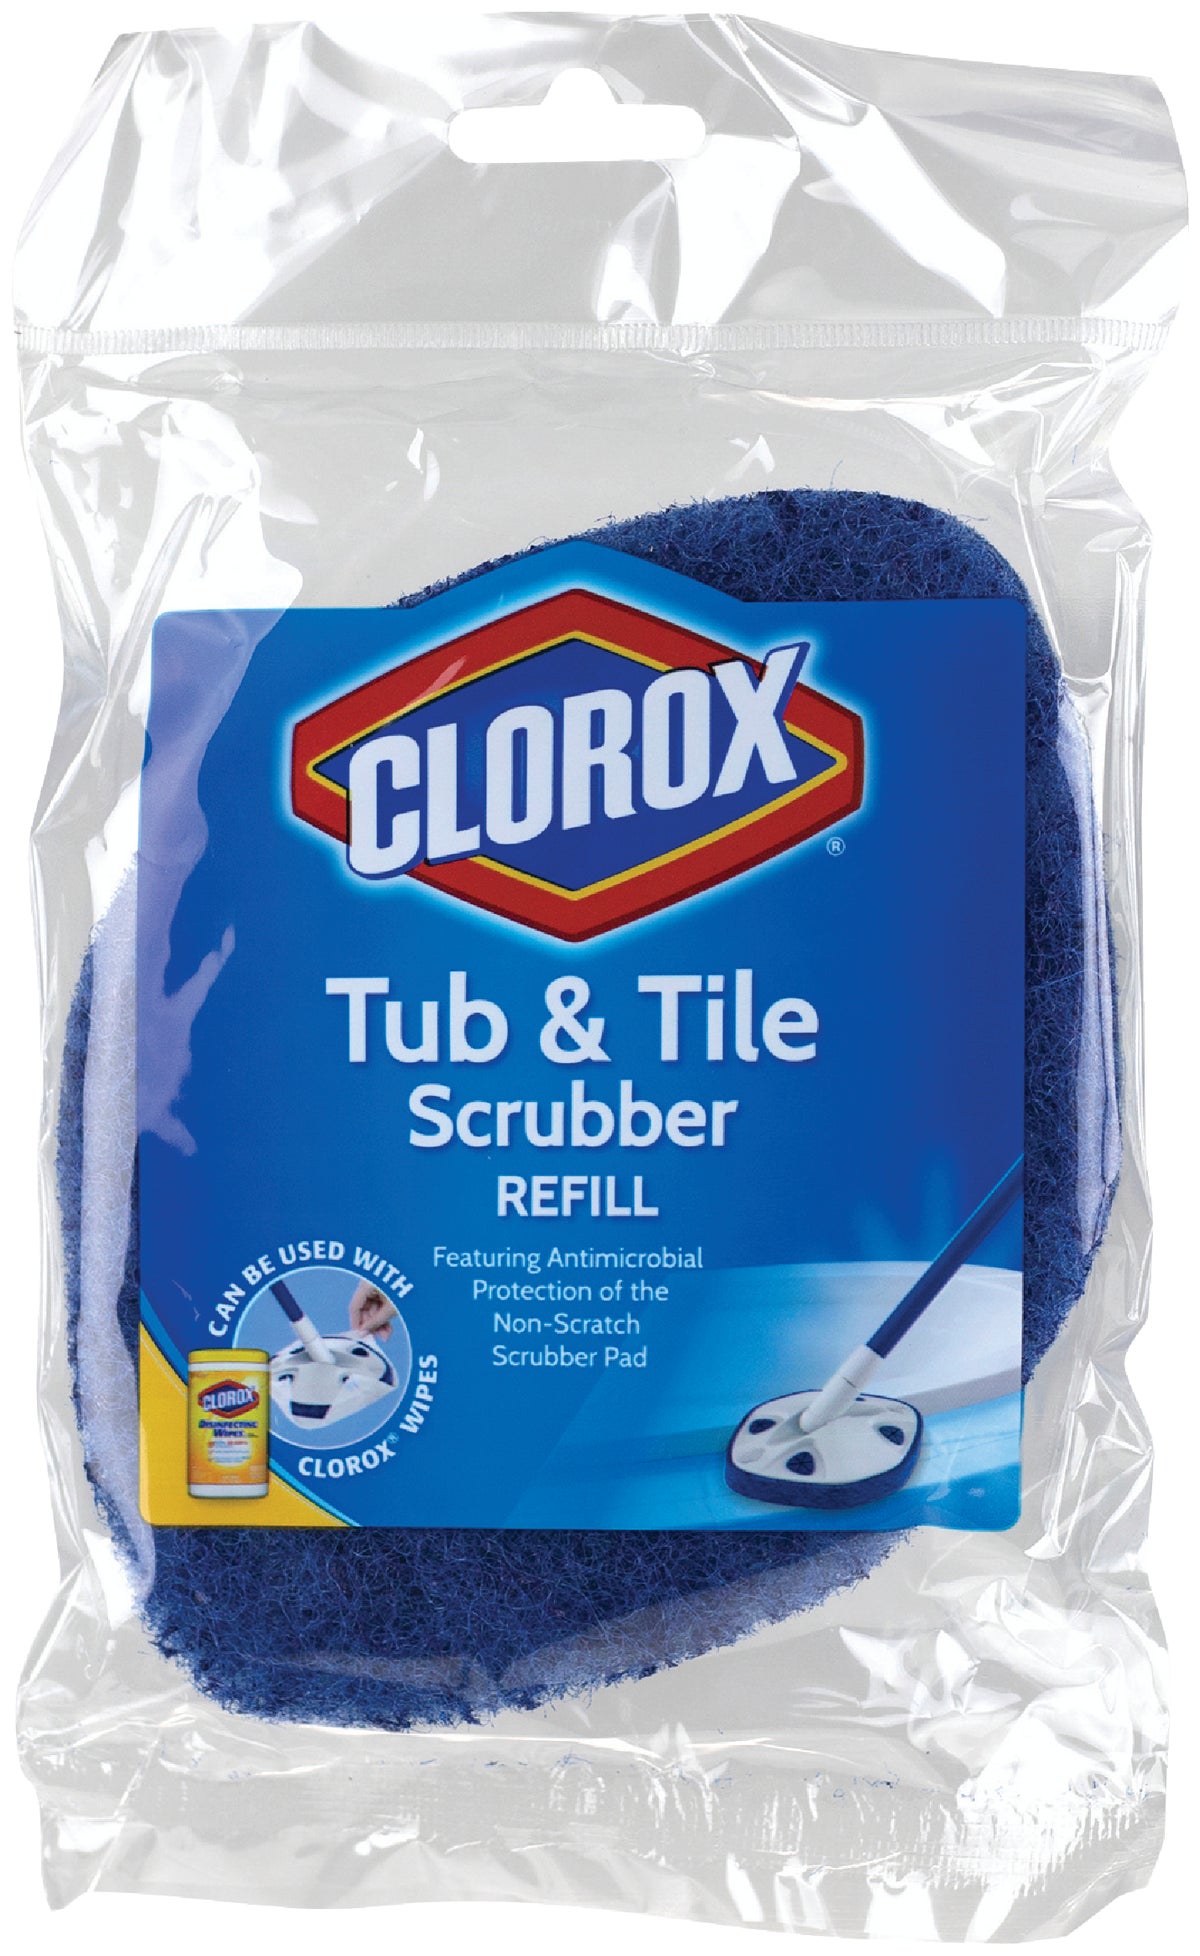 Clorox Tub & Tile Scrubber, Assorted Colors